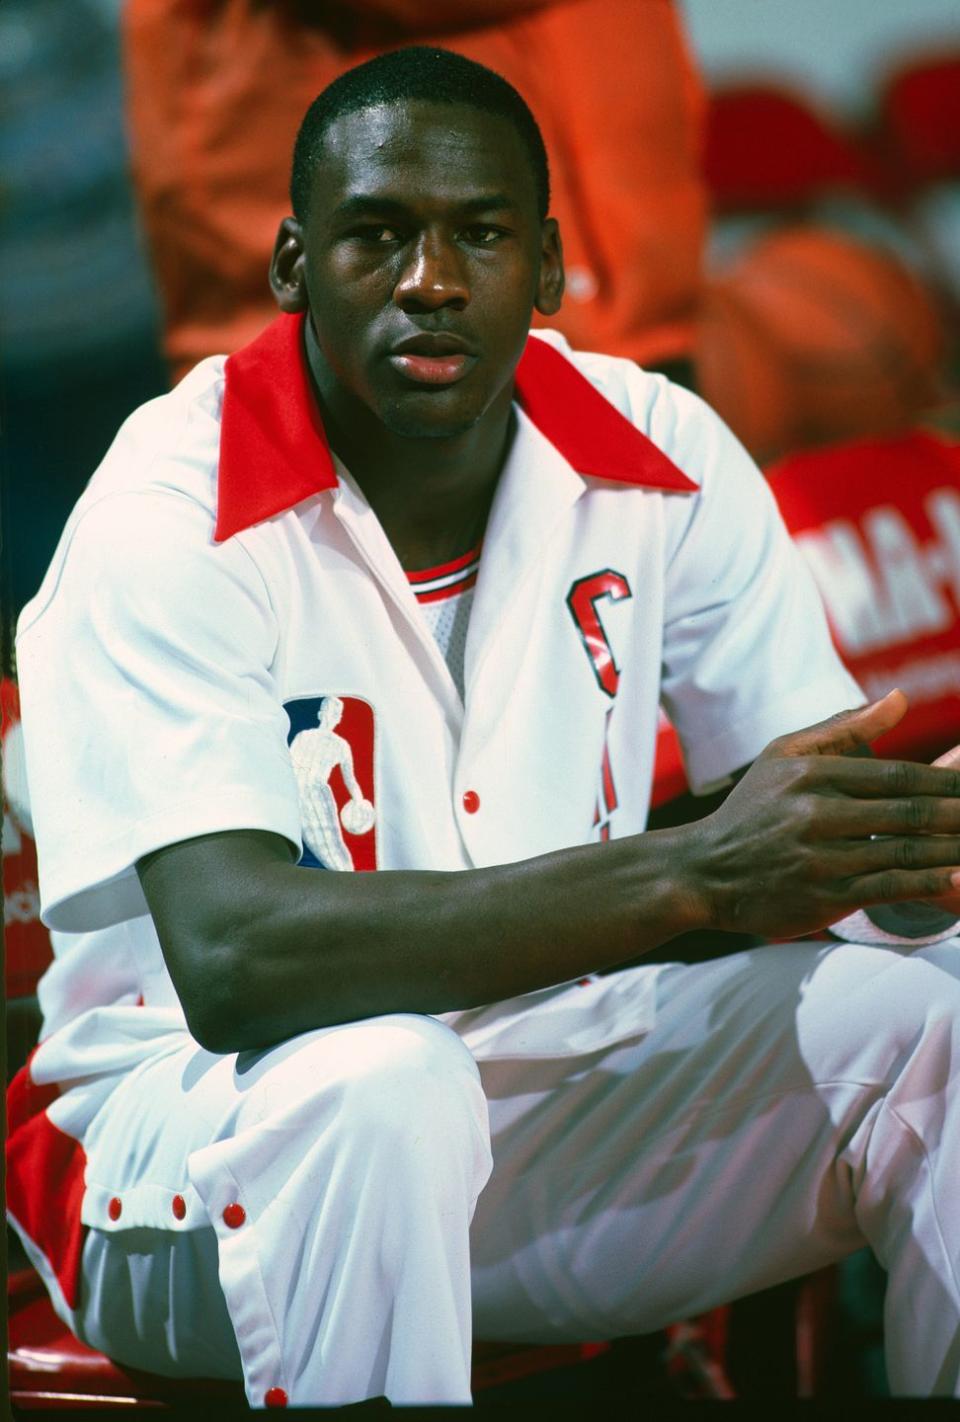 1995: Michael Jordan